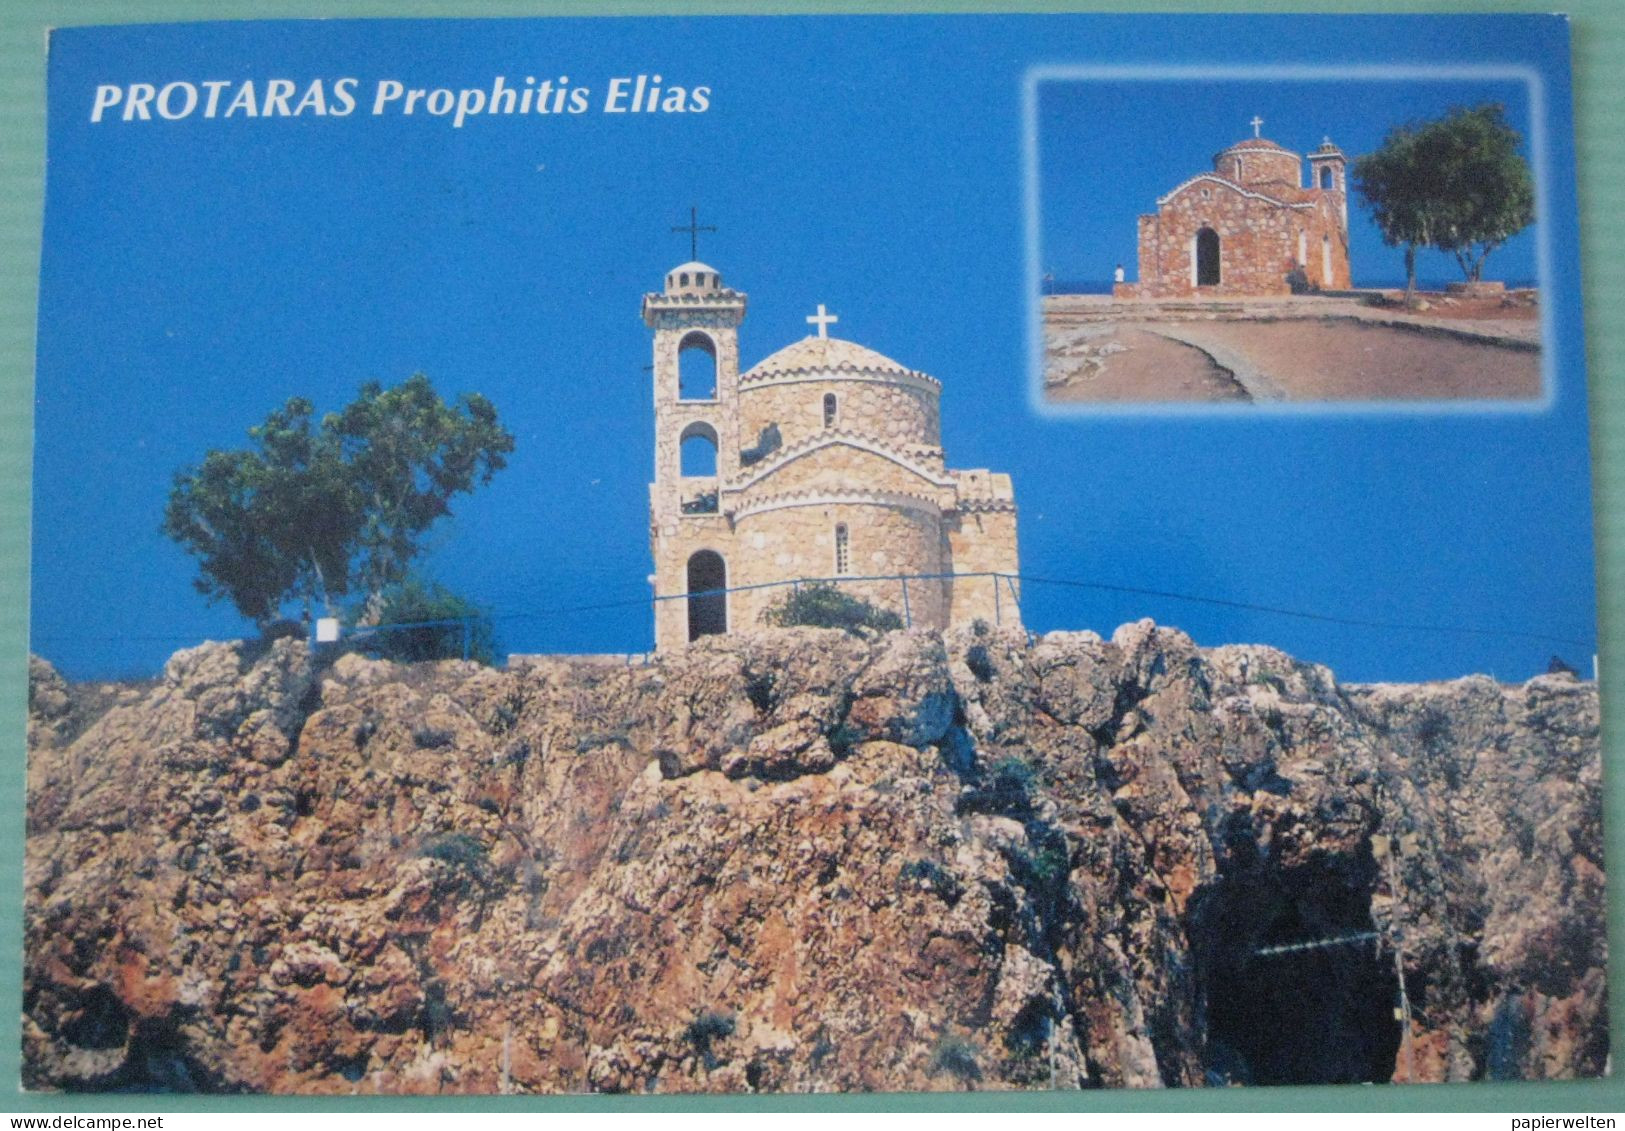 Protaras / Πρωταράς - Prophitis Elias Church - Cyprus